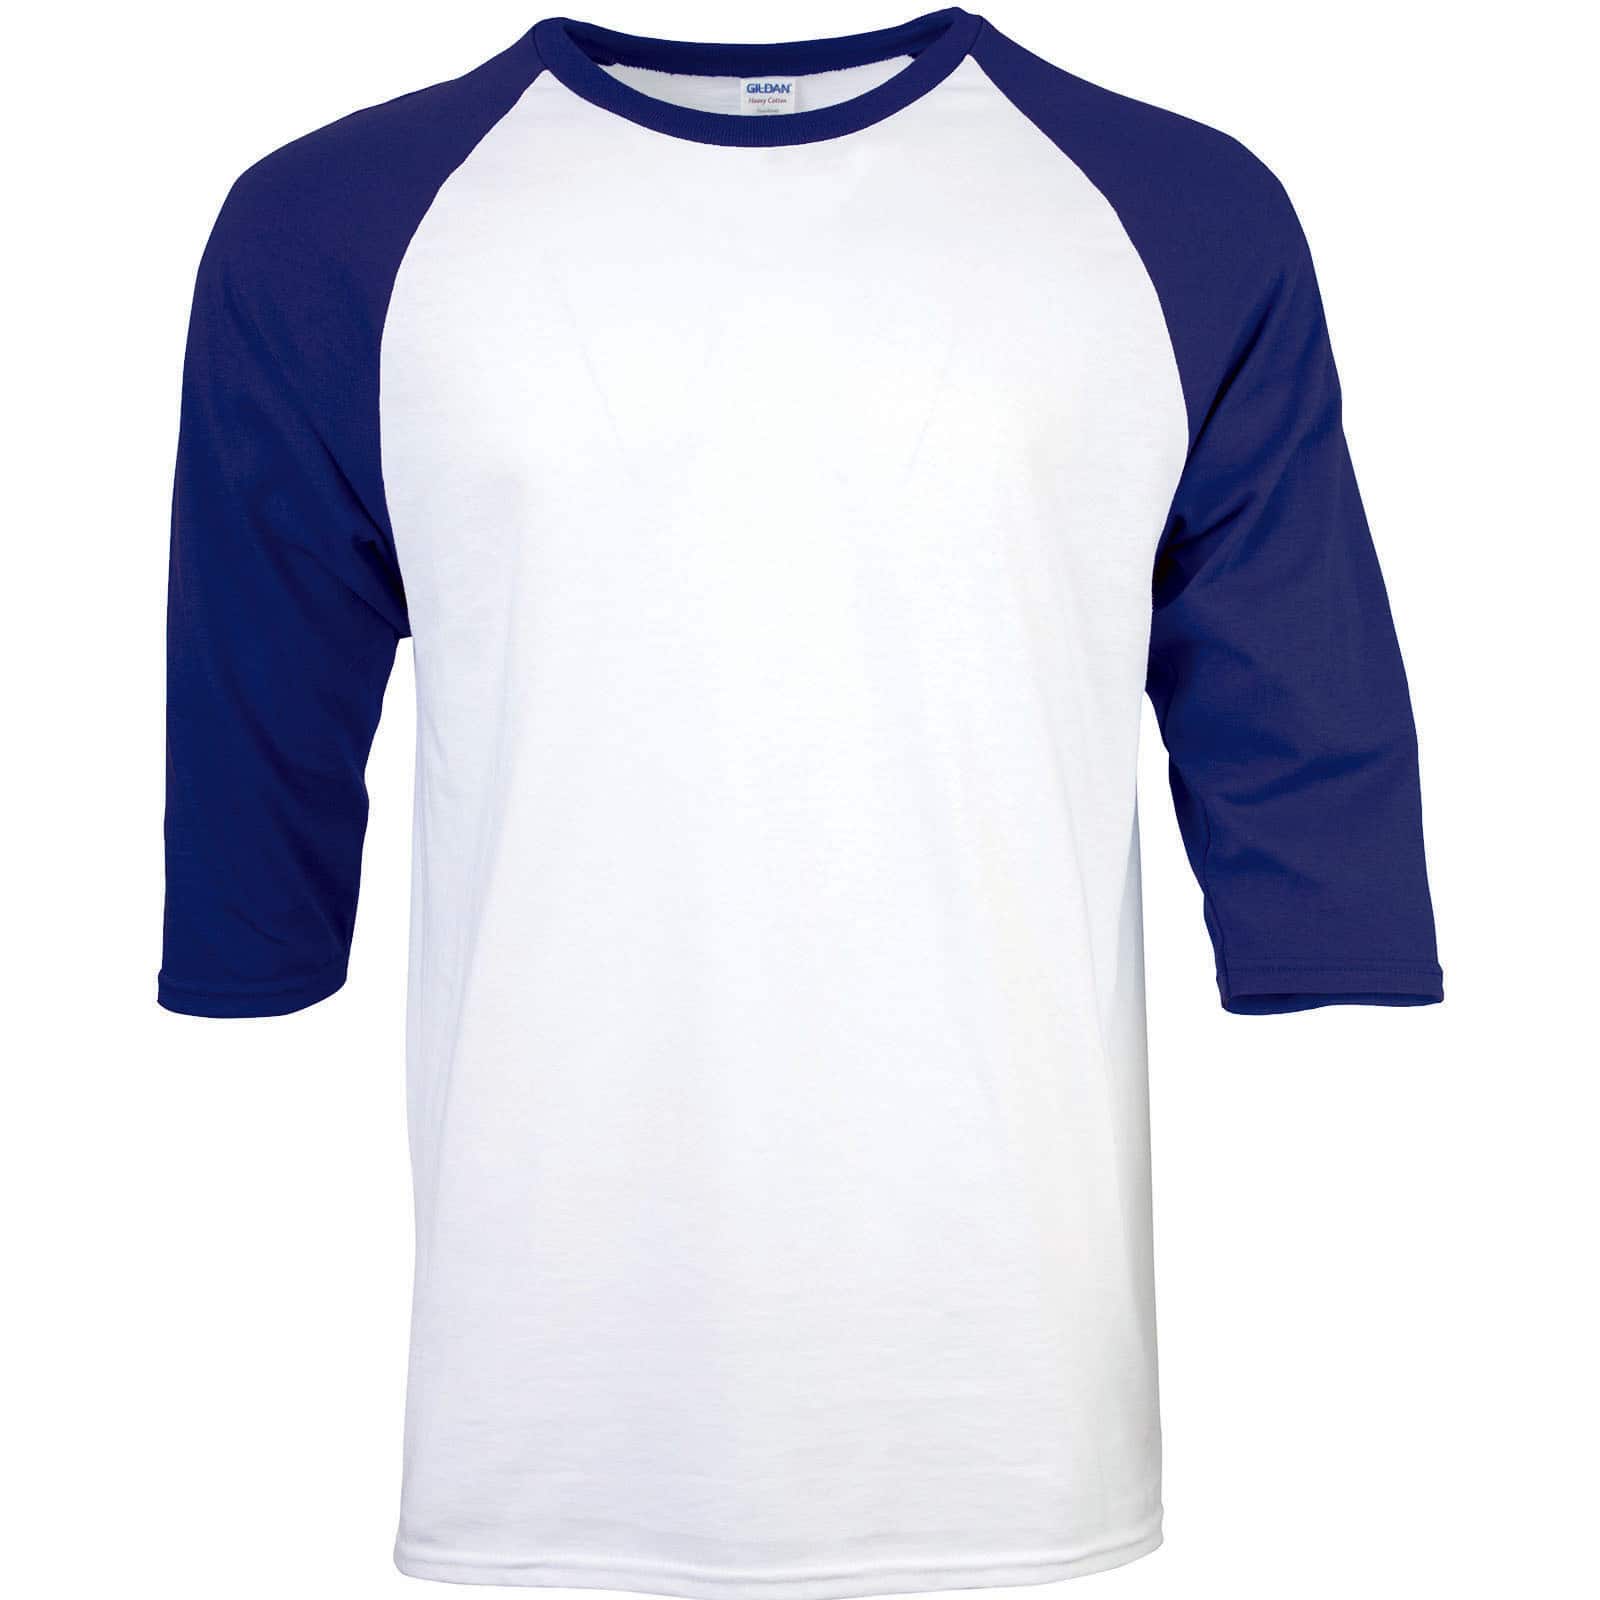 Buy the Gildan® Adult Raglan T-Shirt at Michaels